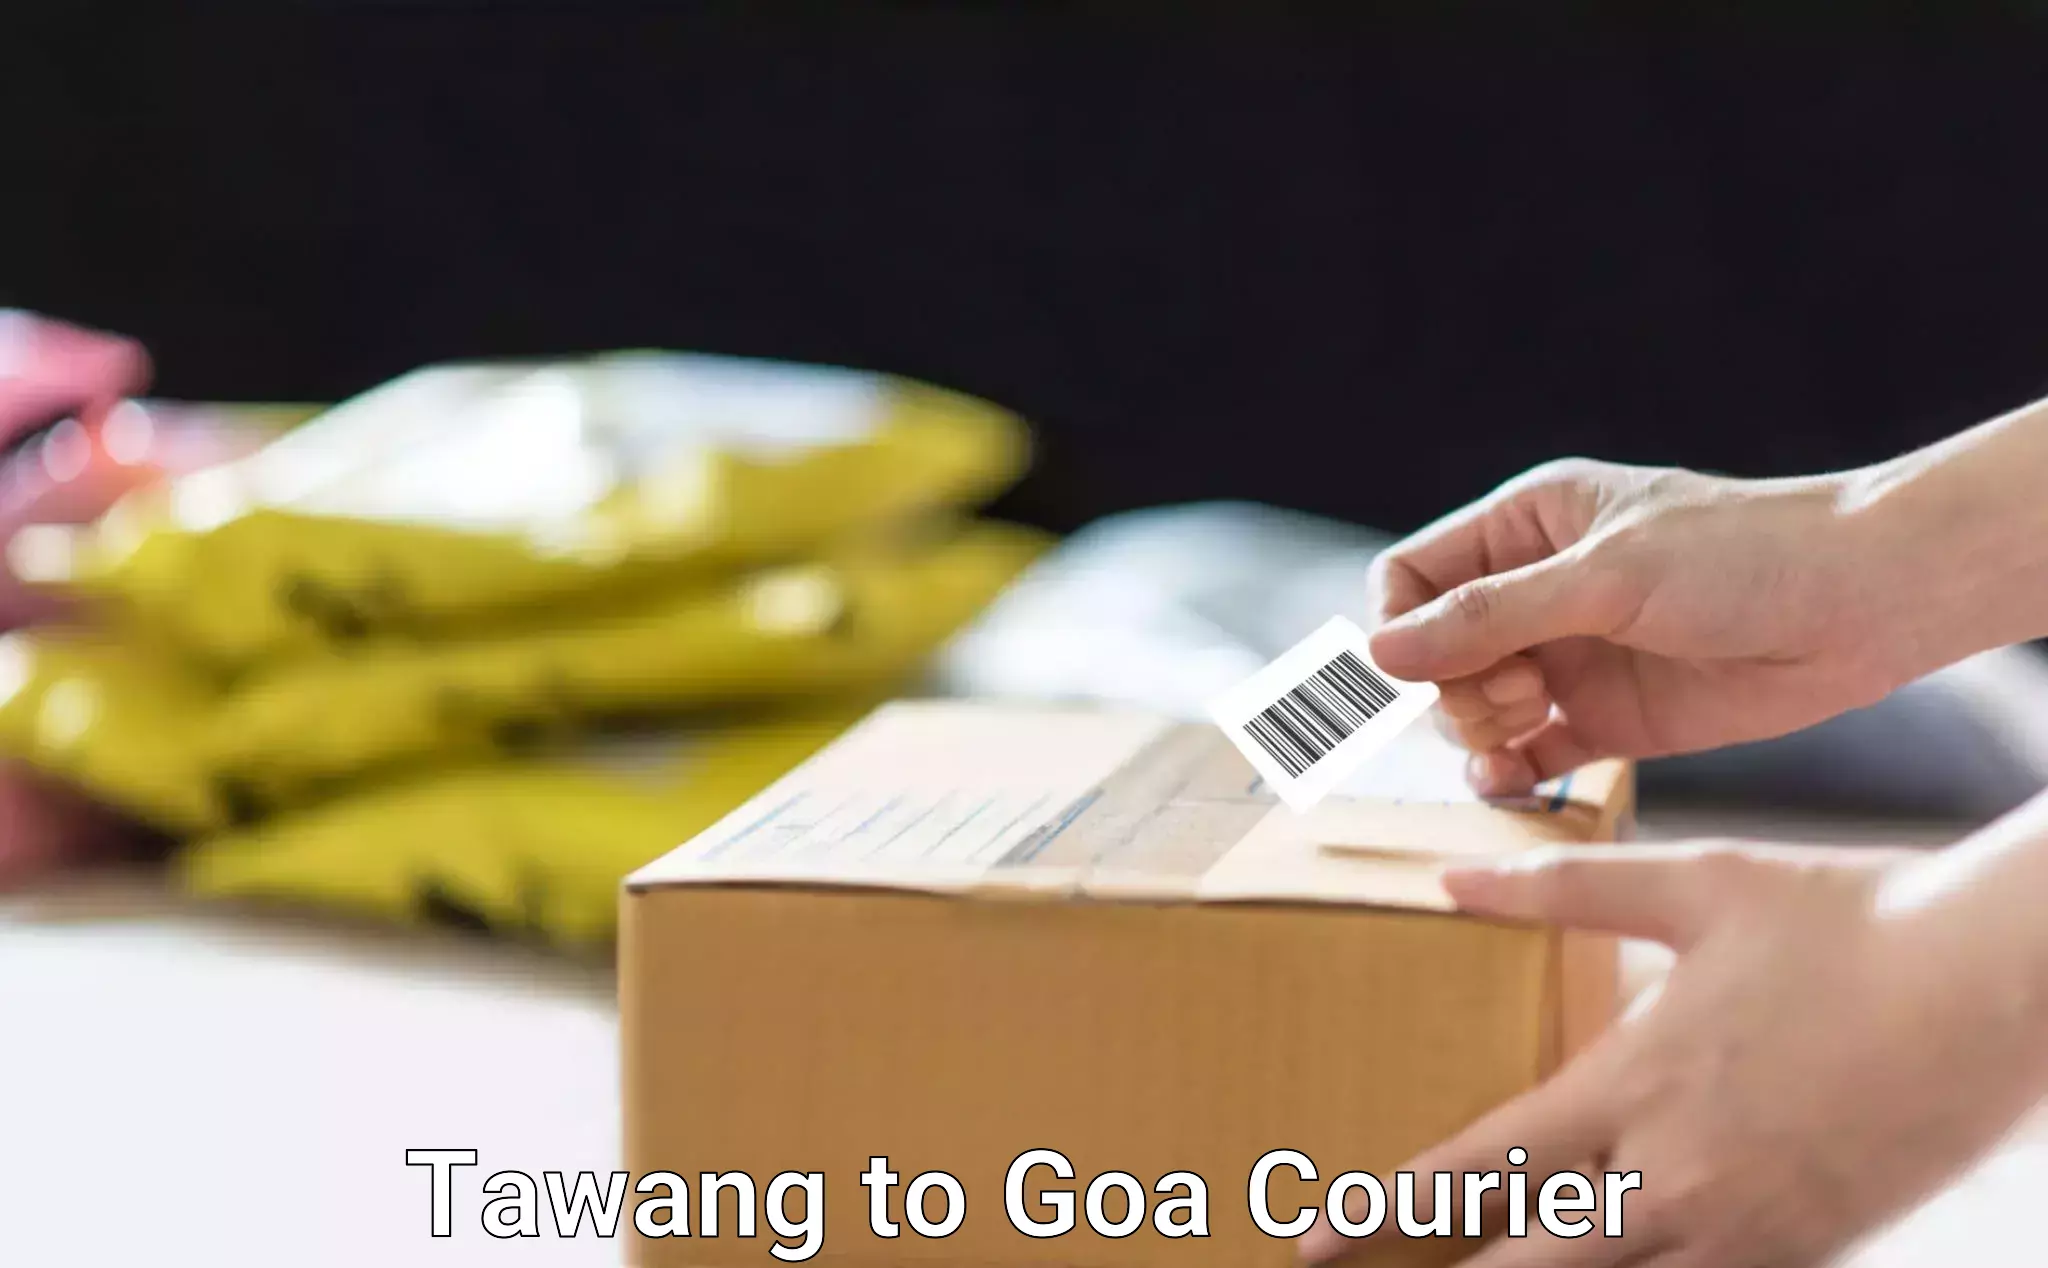 Global logistics network Tawang to Goa University